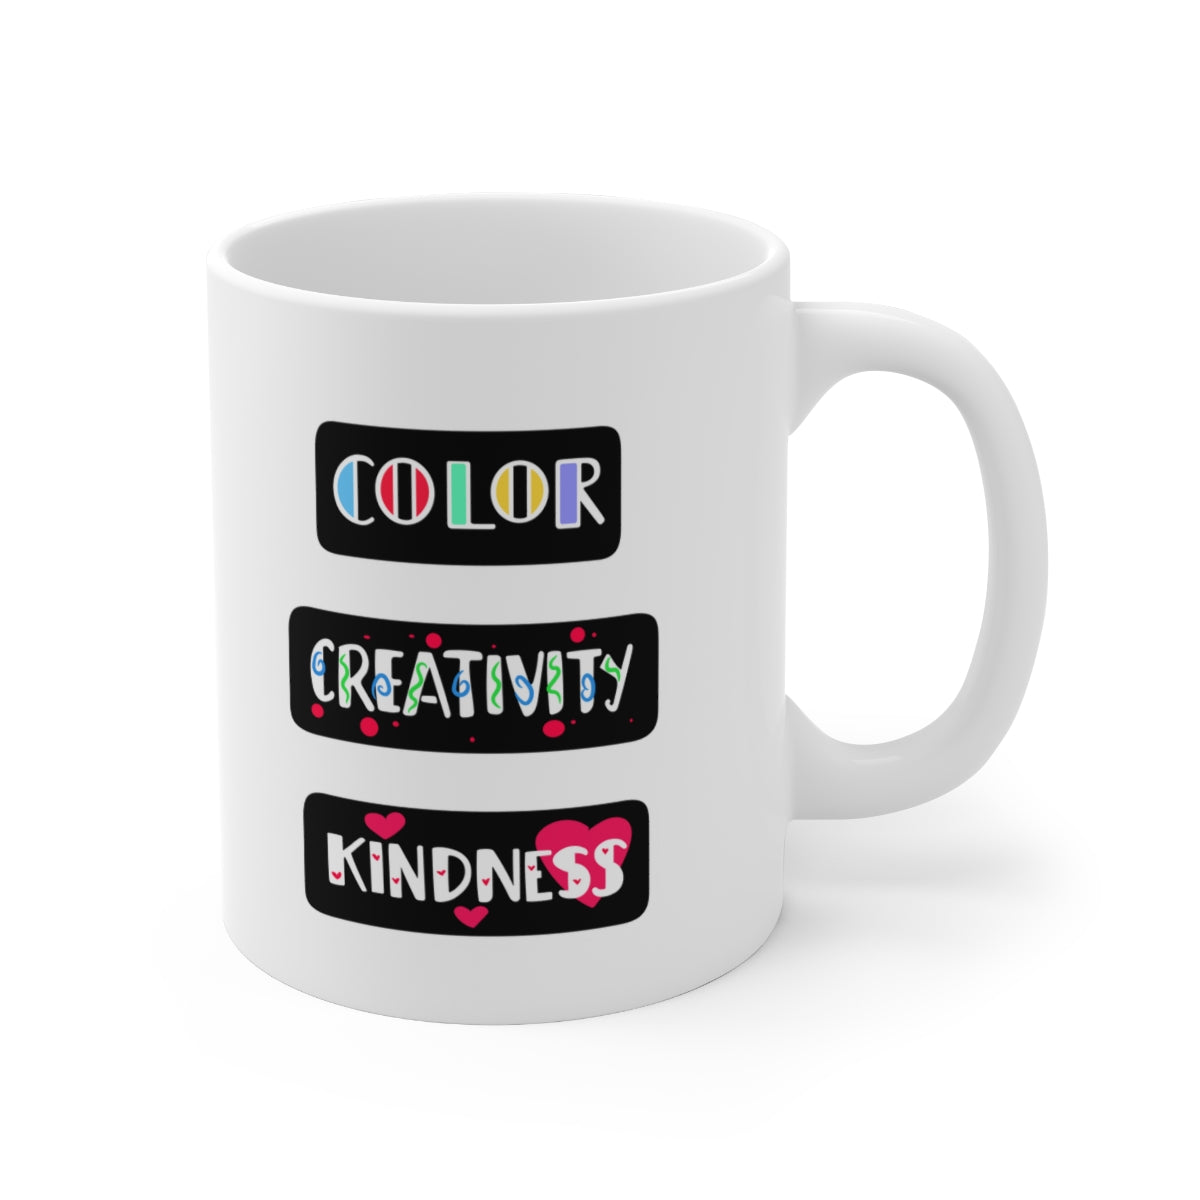 TOOLI-ART Ceramic Mug 11oz - COLOR CREATIVITY KINDNESS